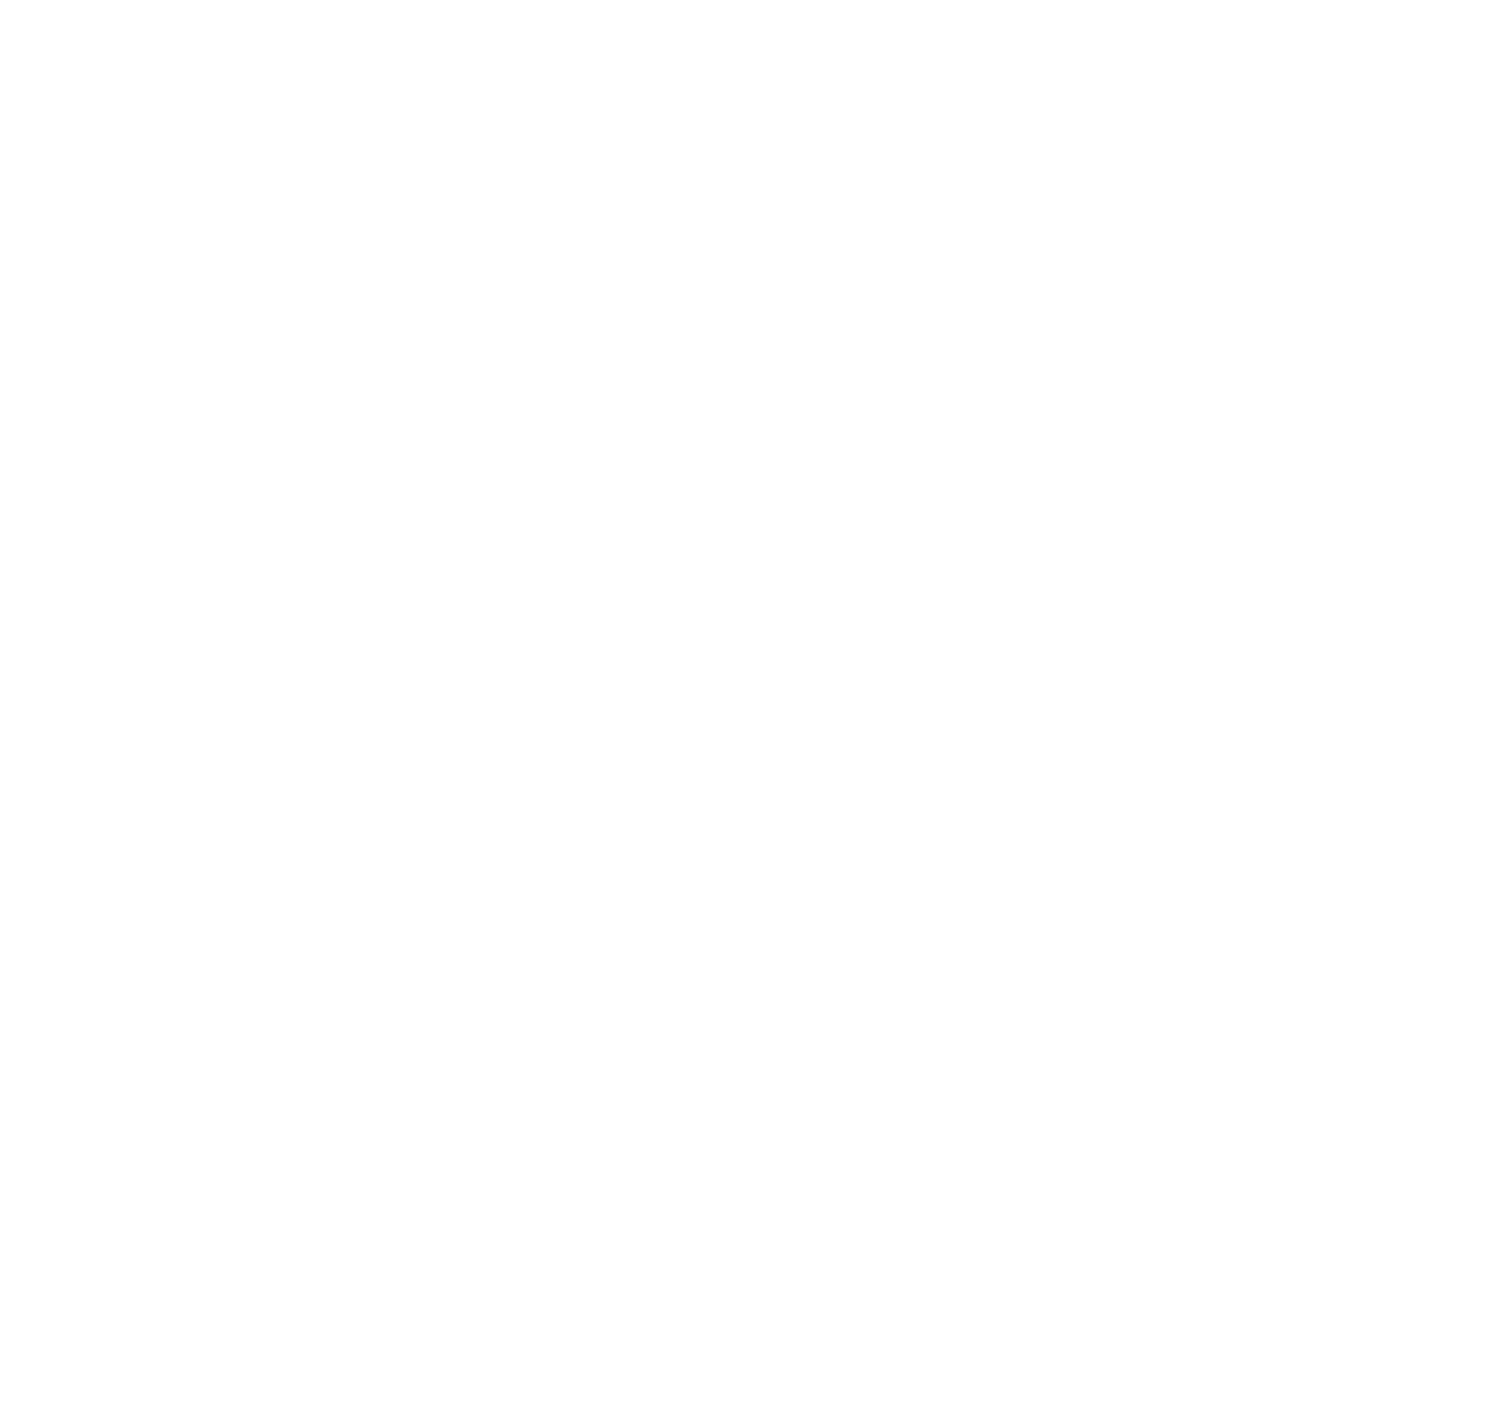 Macquarie logo for dark backgrounds (transparent PNG)